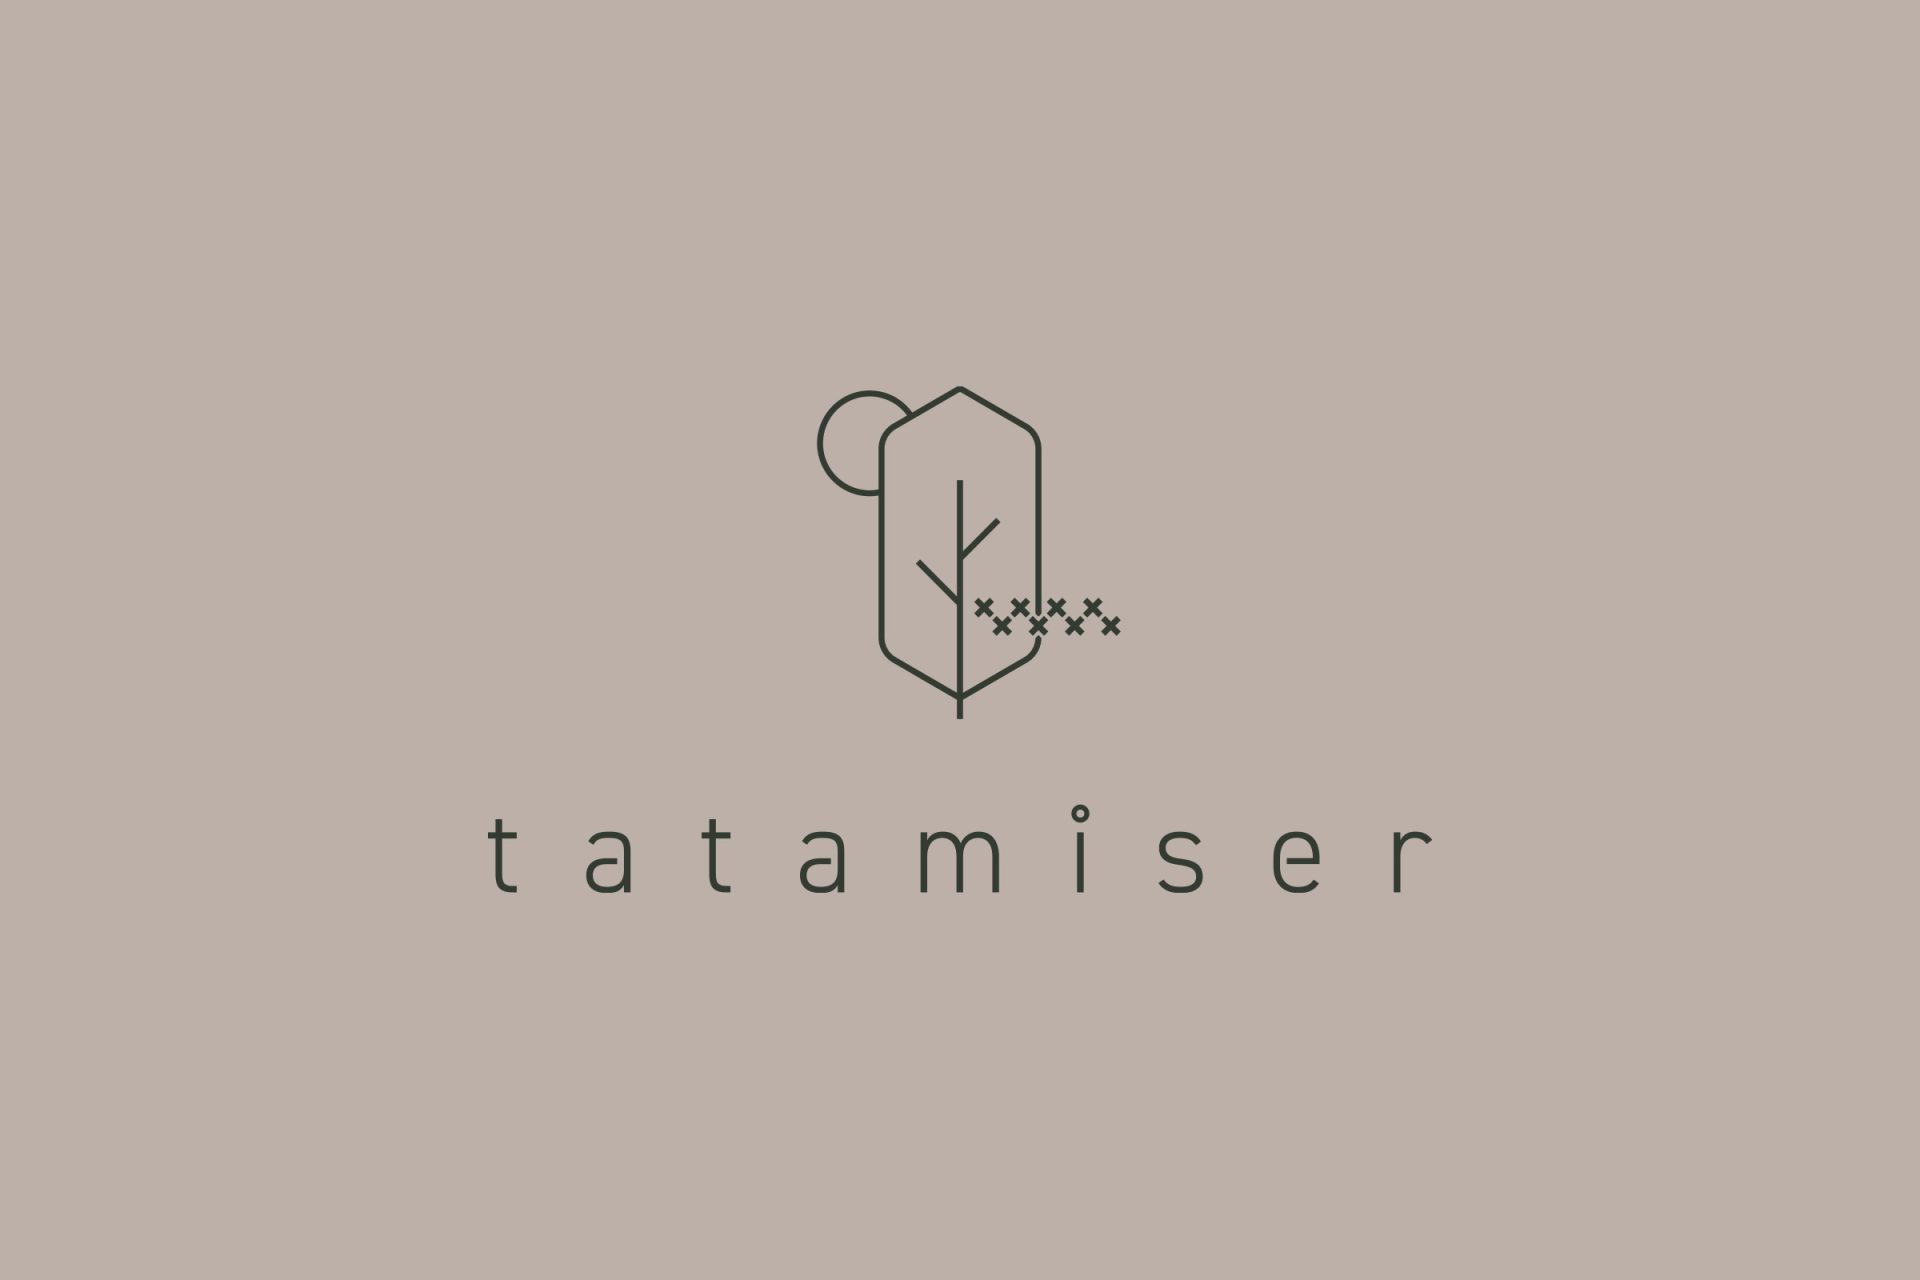 tatamiser